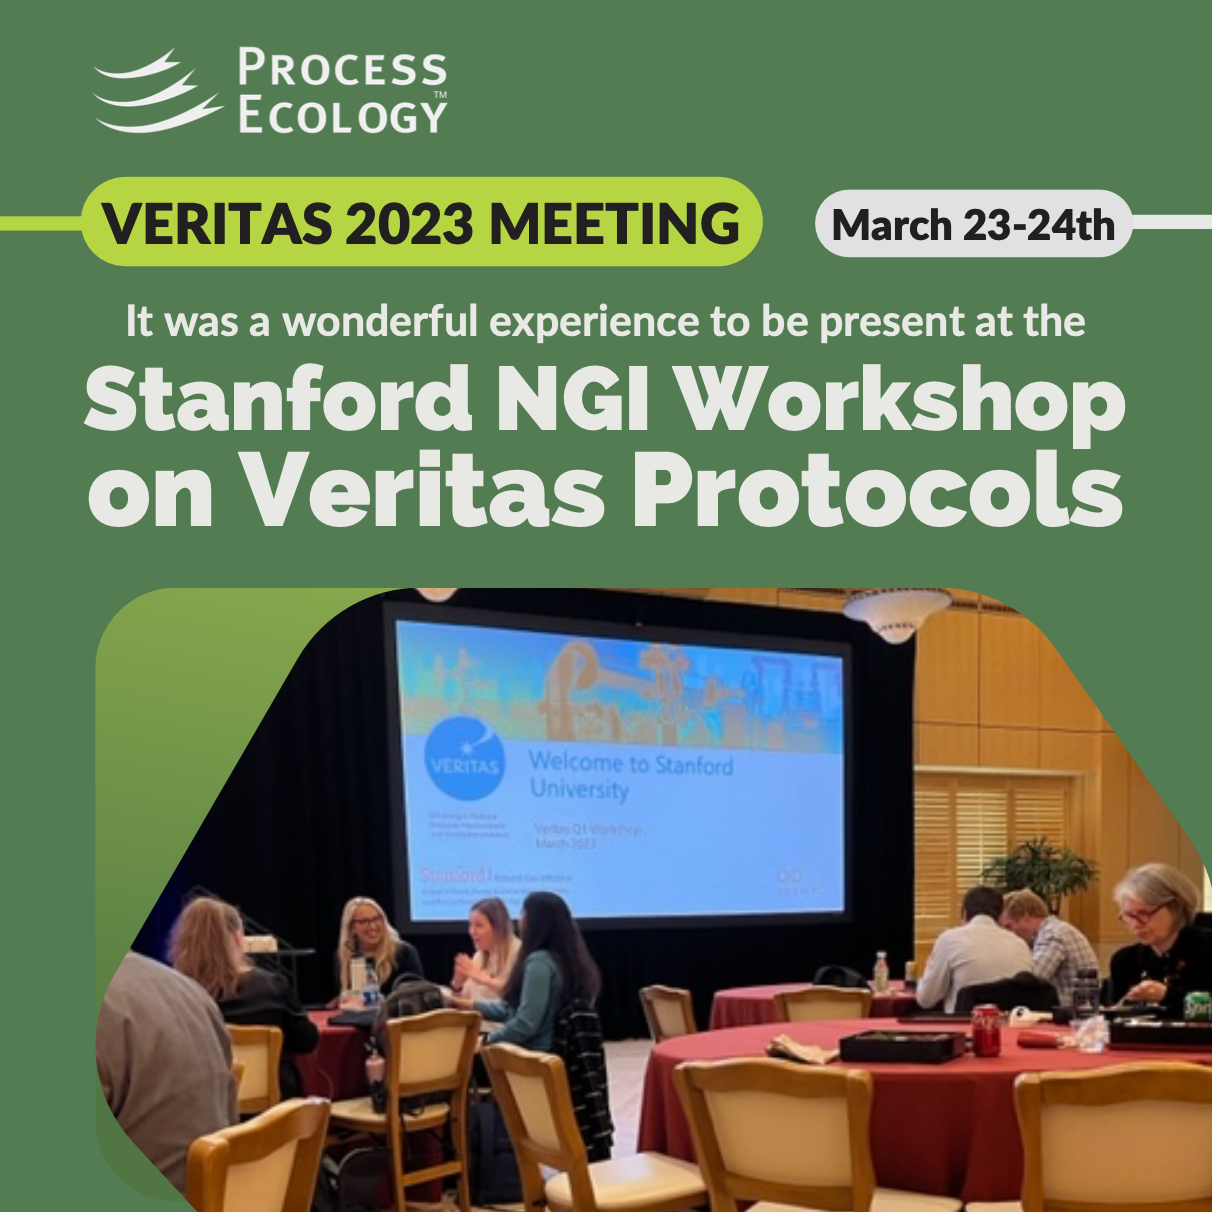 Stanford NGI Workshop on Veritas Protocols